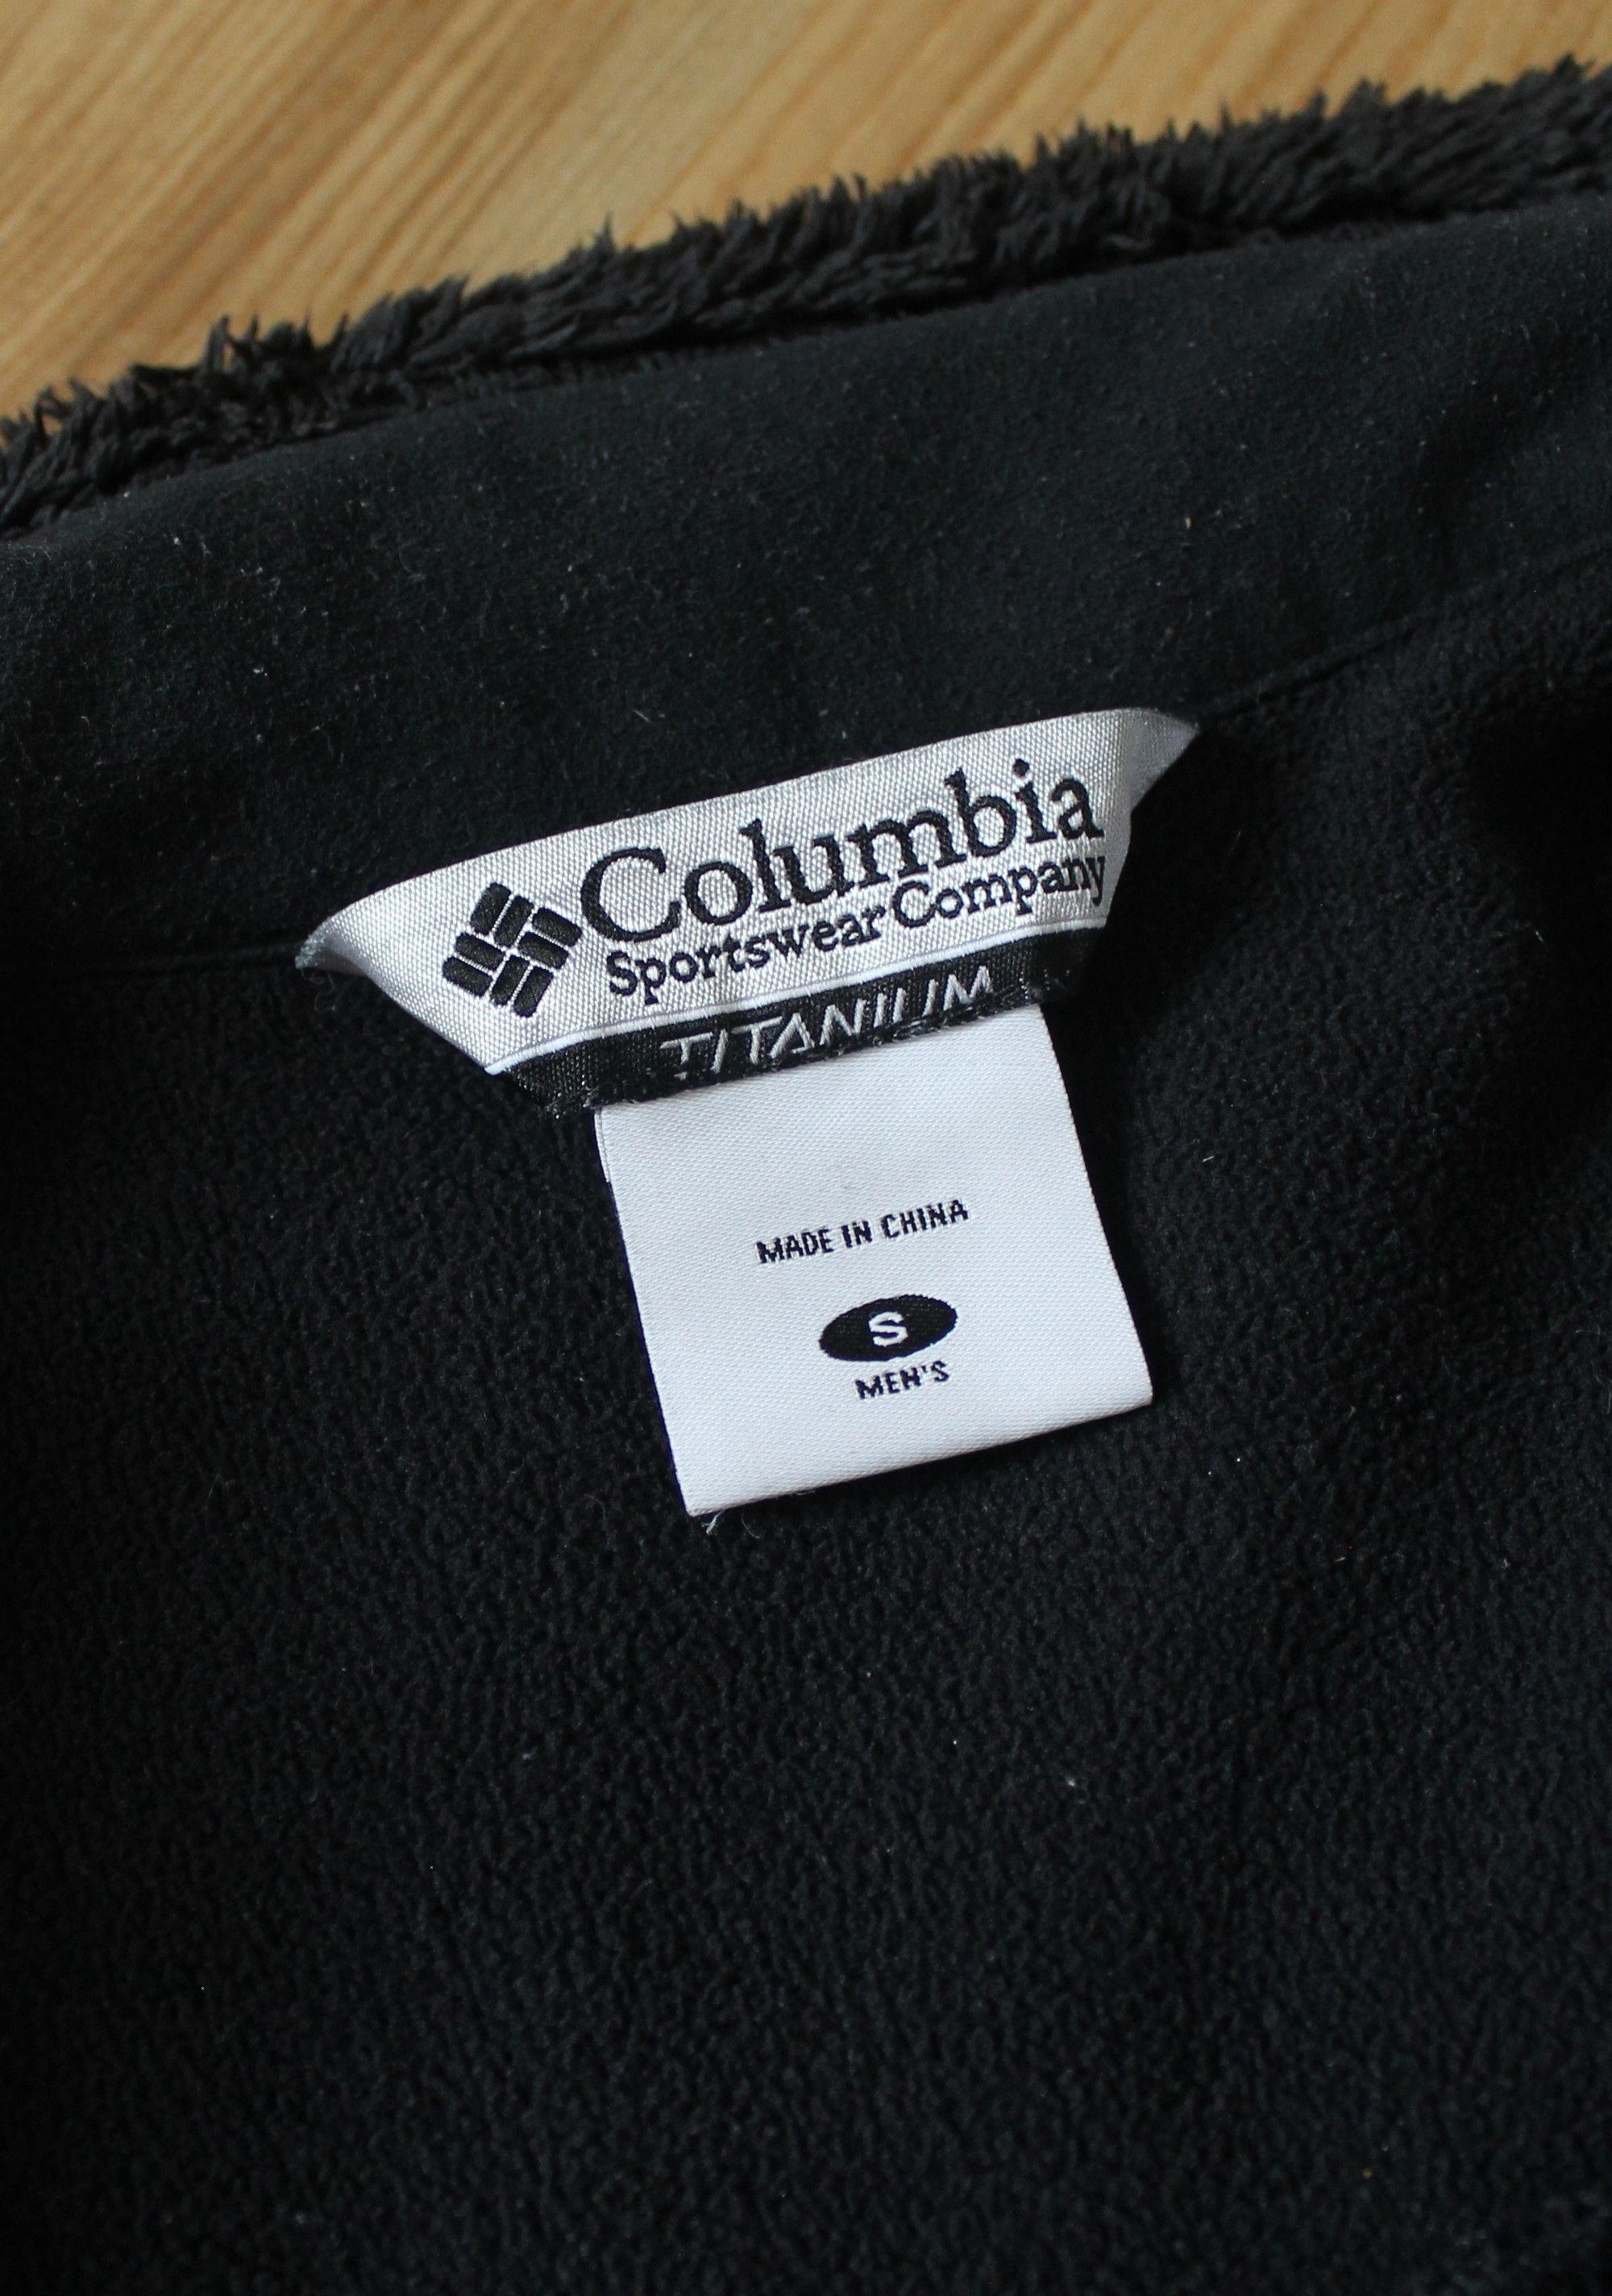 Columbia Columbia Titanium Fleece Jacket Size US S / EU 44-46 / 1 - 7 Thumbnail